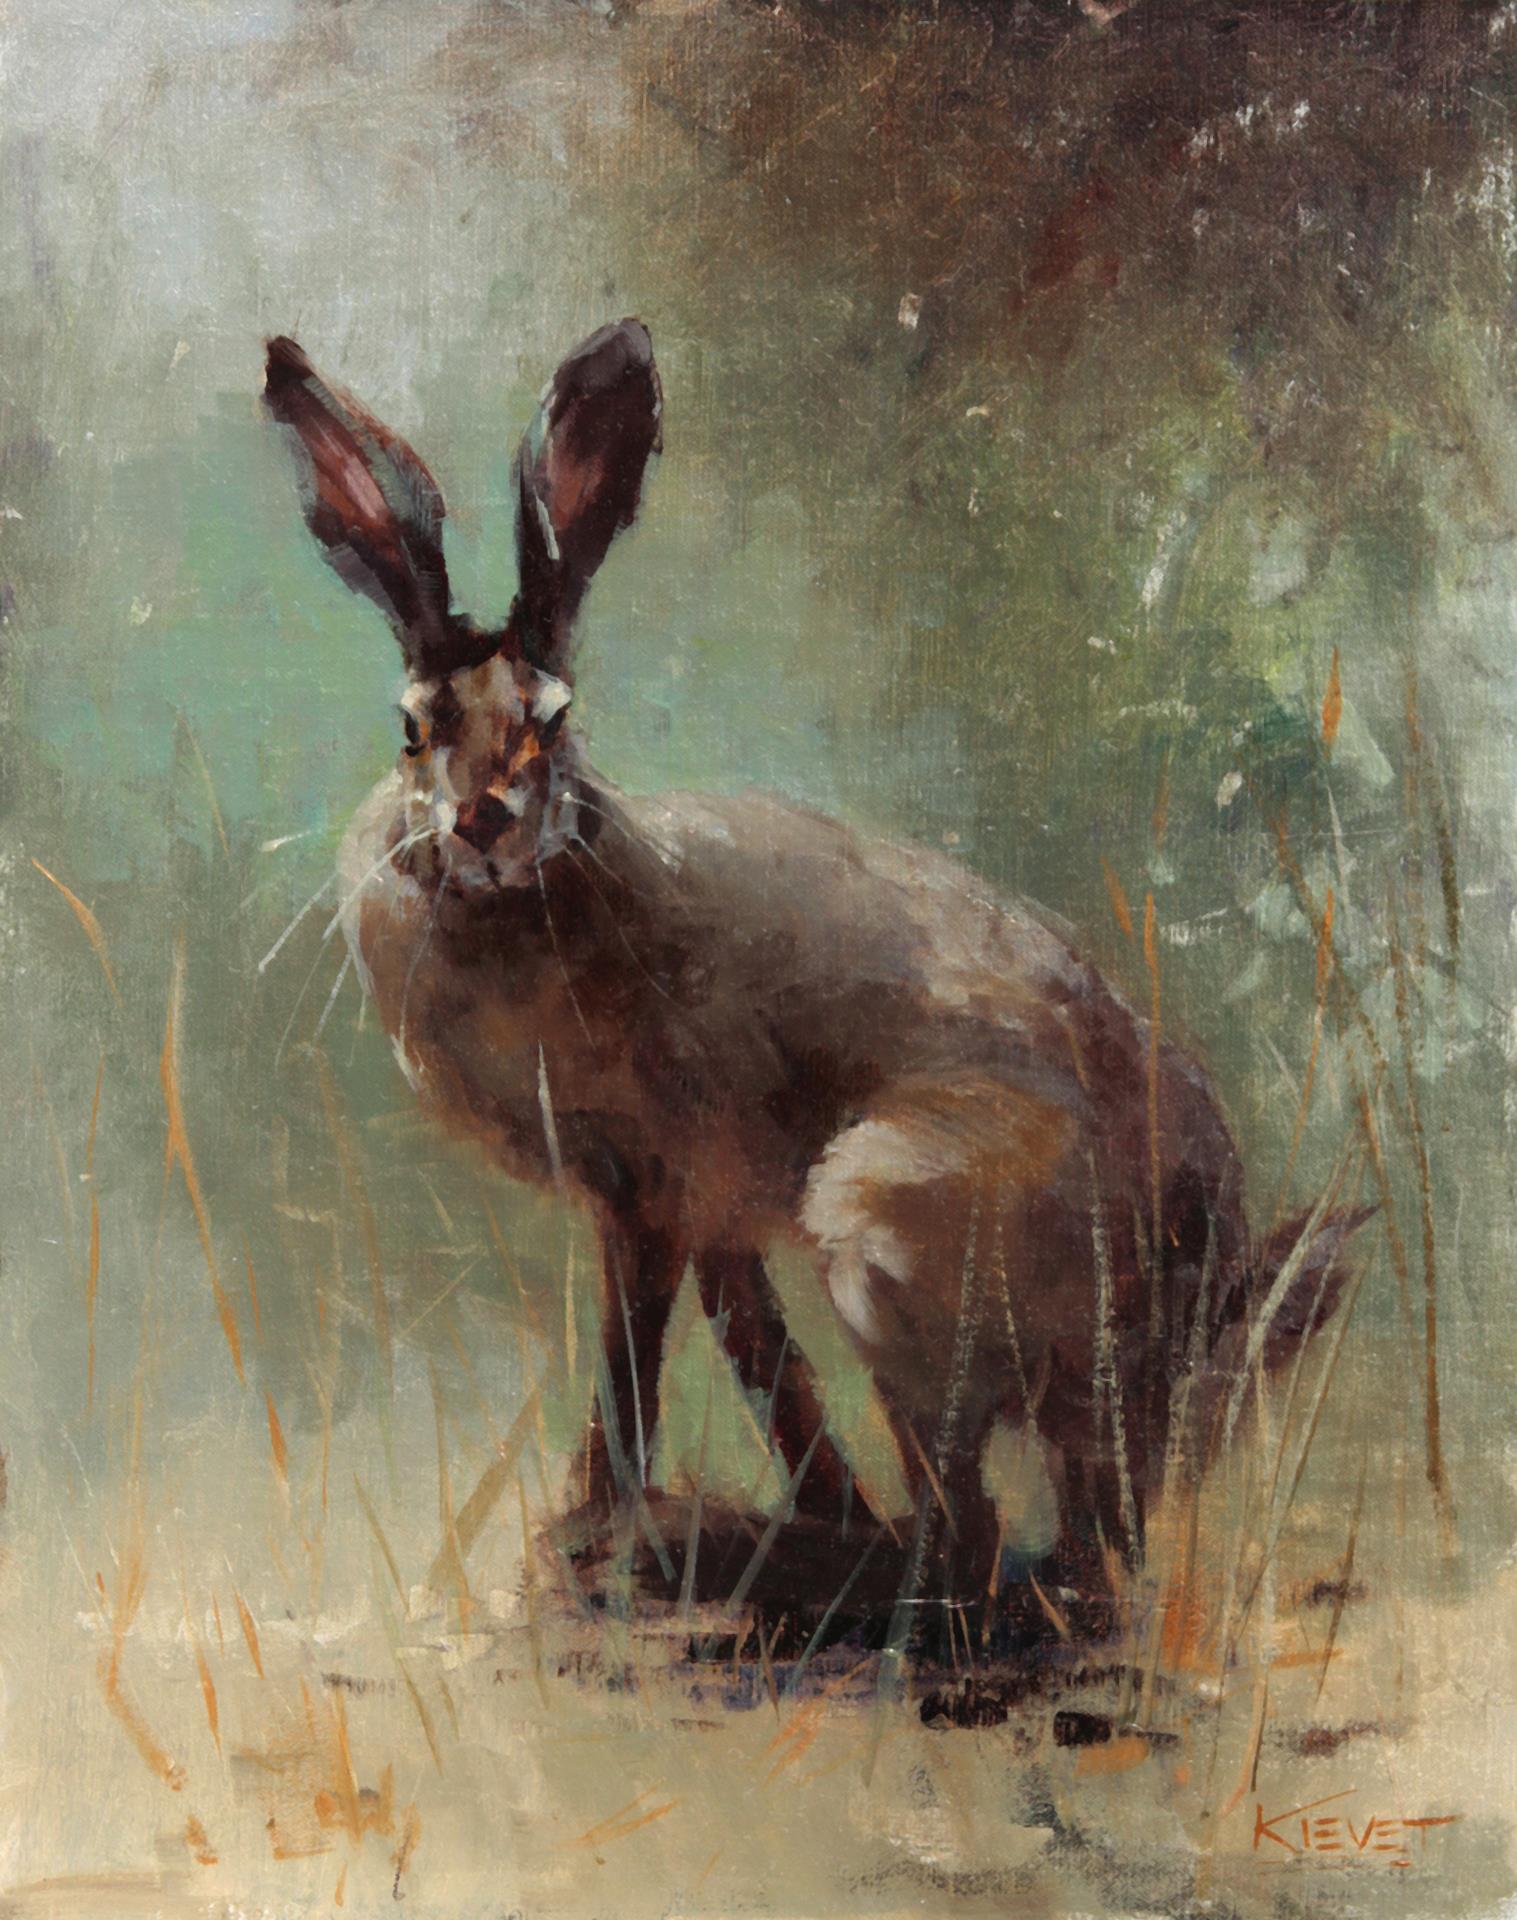 Fran Kievet, Wild Hare